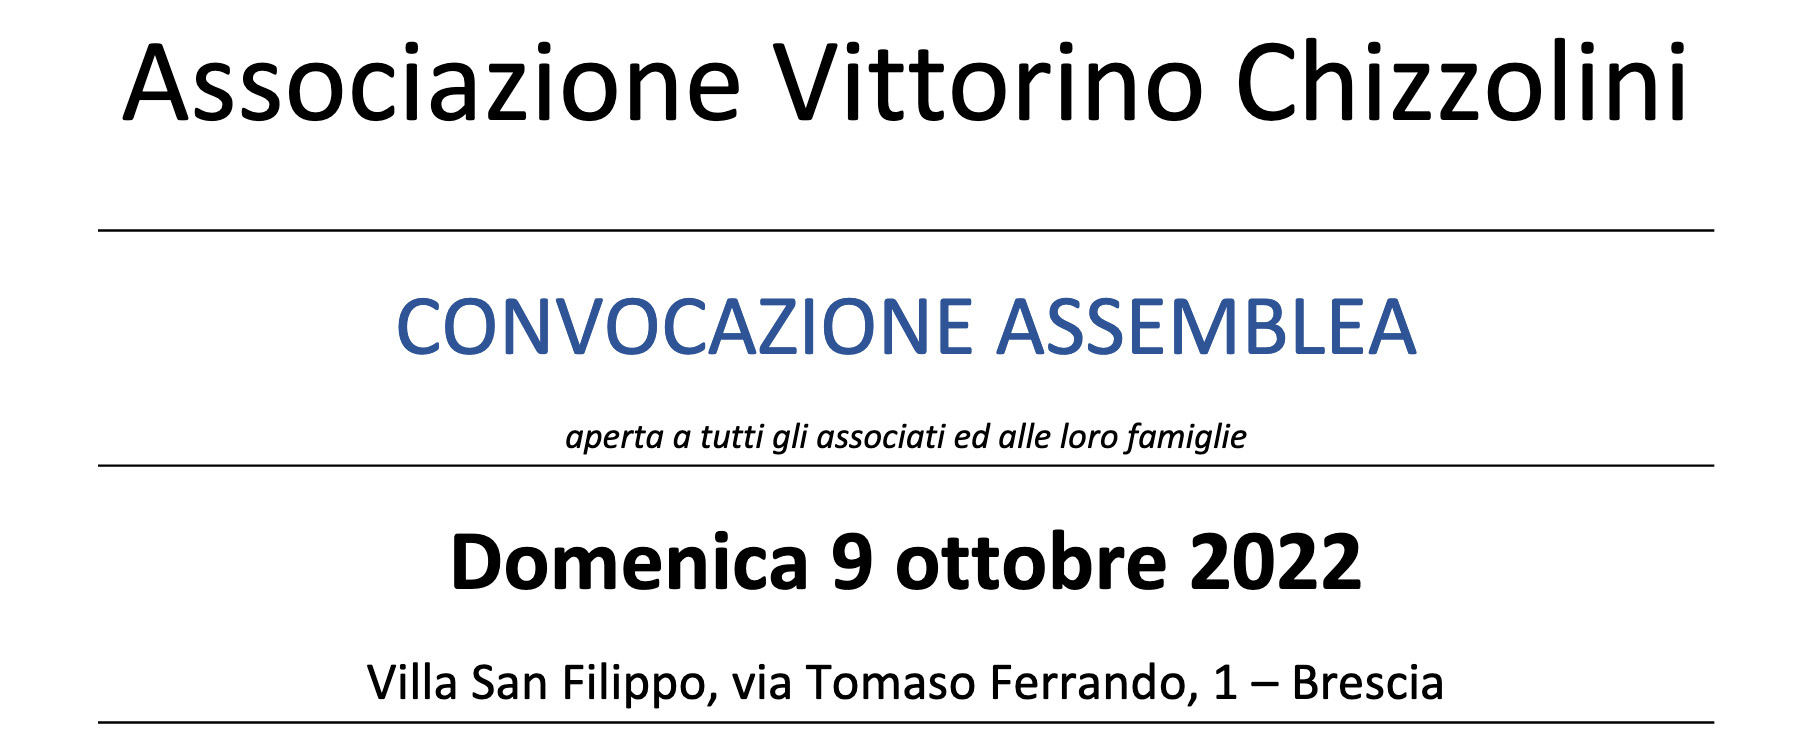 9 ottobre - Assemblea Associazione Ex-Studenti Vittorino Chizzolini